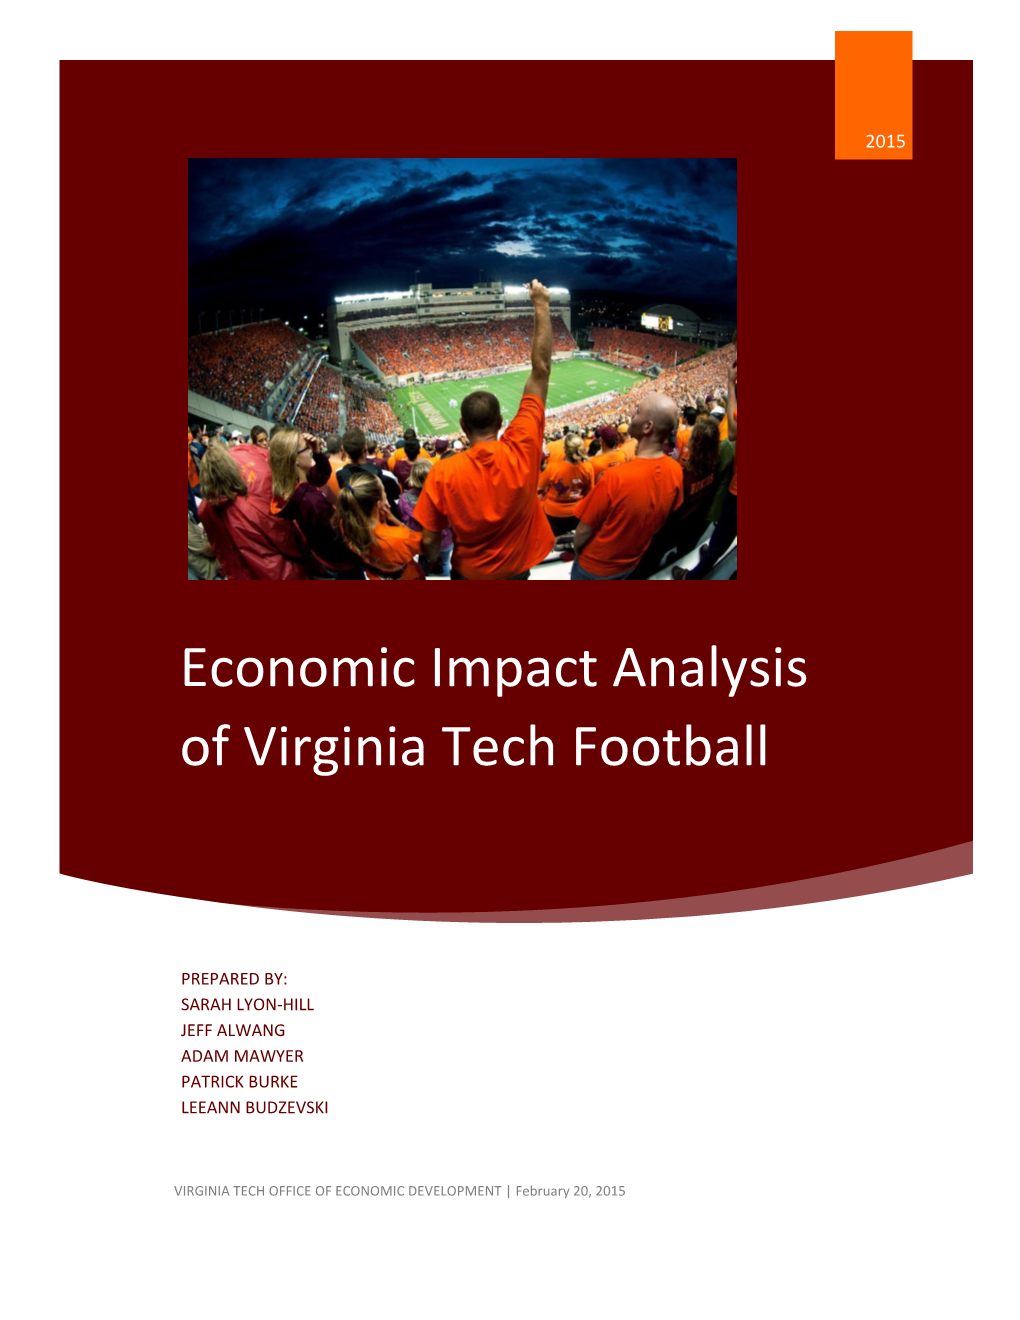 Economic Impact Analysis of Virginia Tech Football